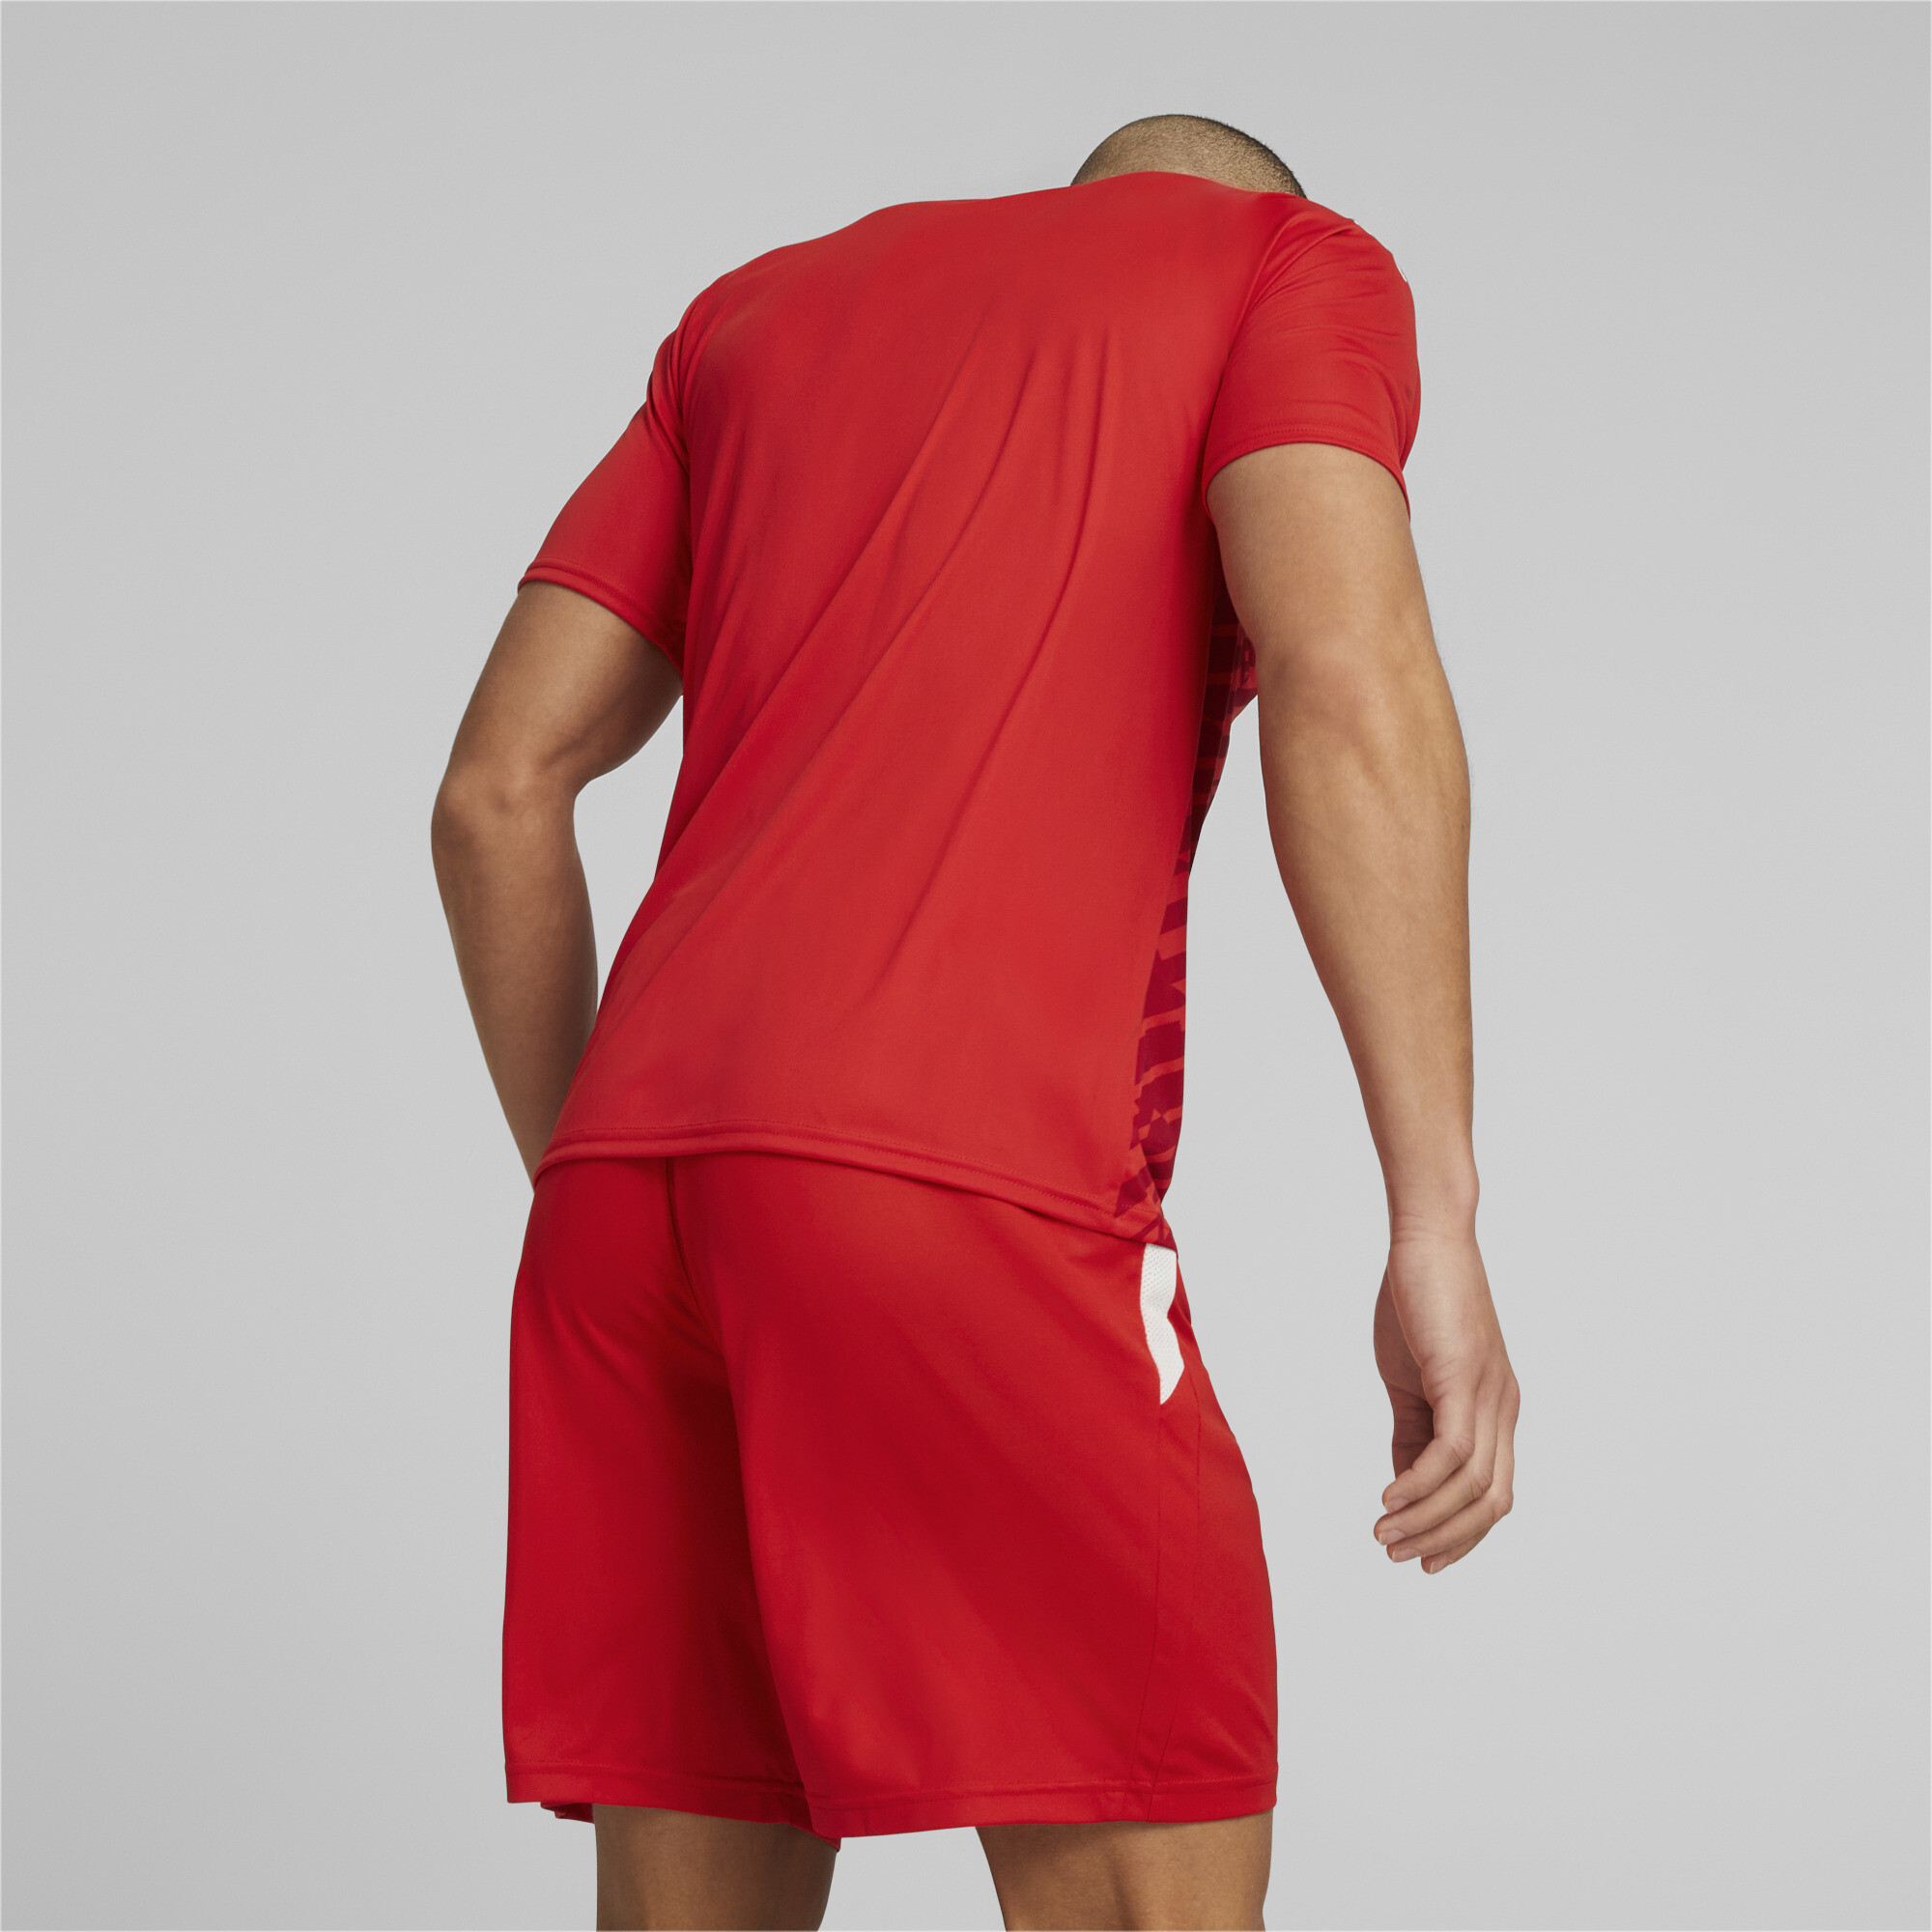 Men's Puma Team ULTIMATE Football Jersey, Red, Size XS, Sport